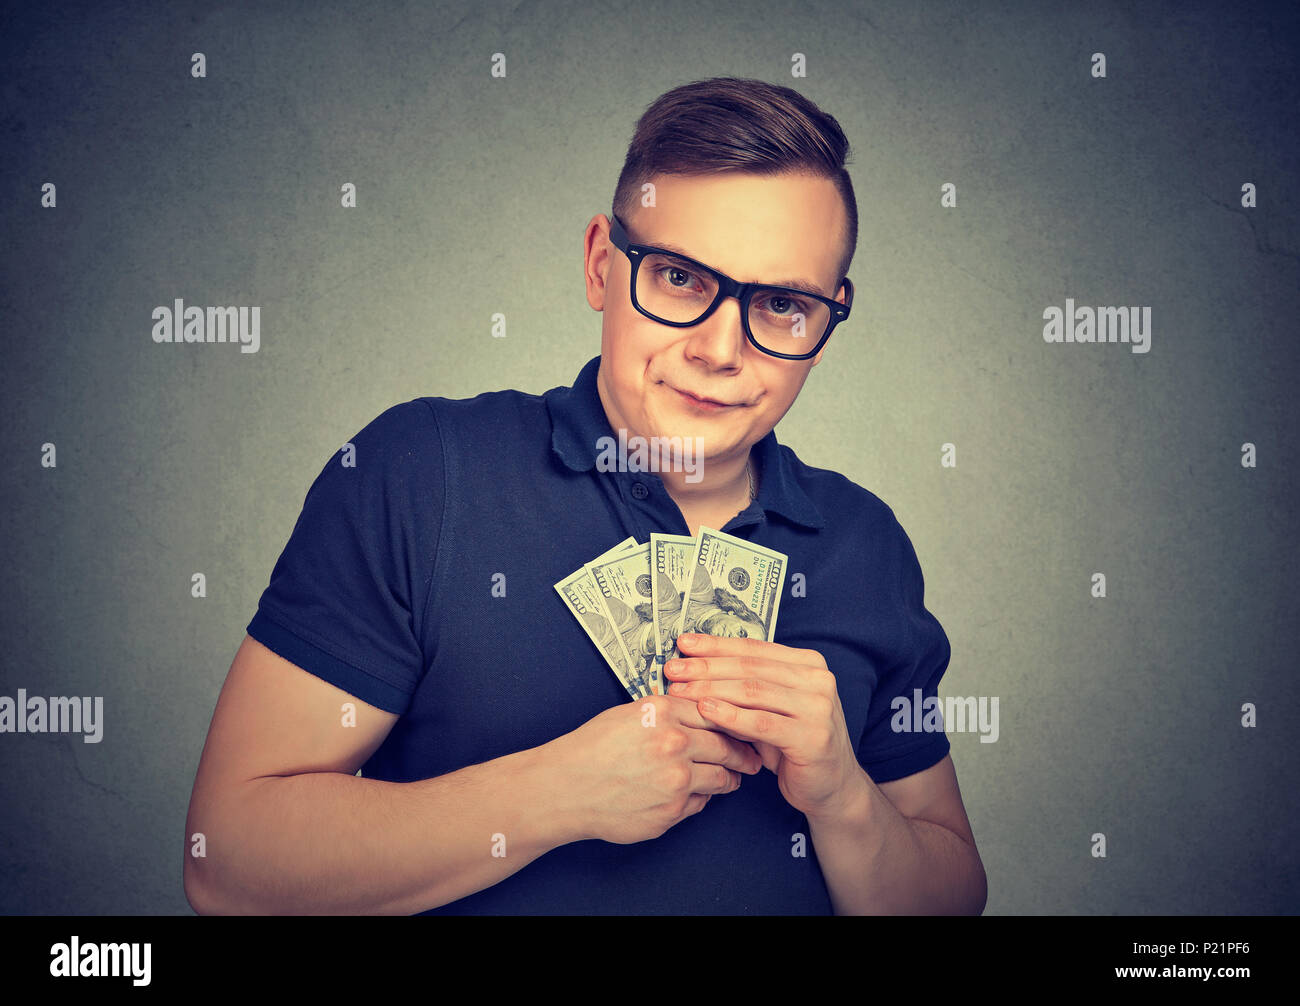 Serious suspicious greedy man with money Stock Photo